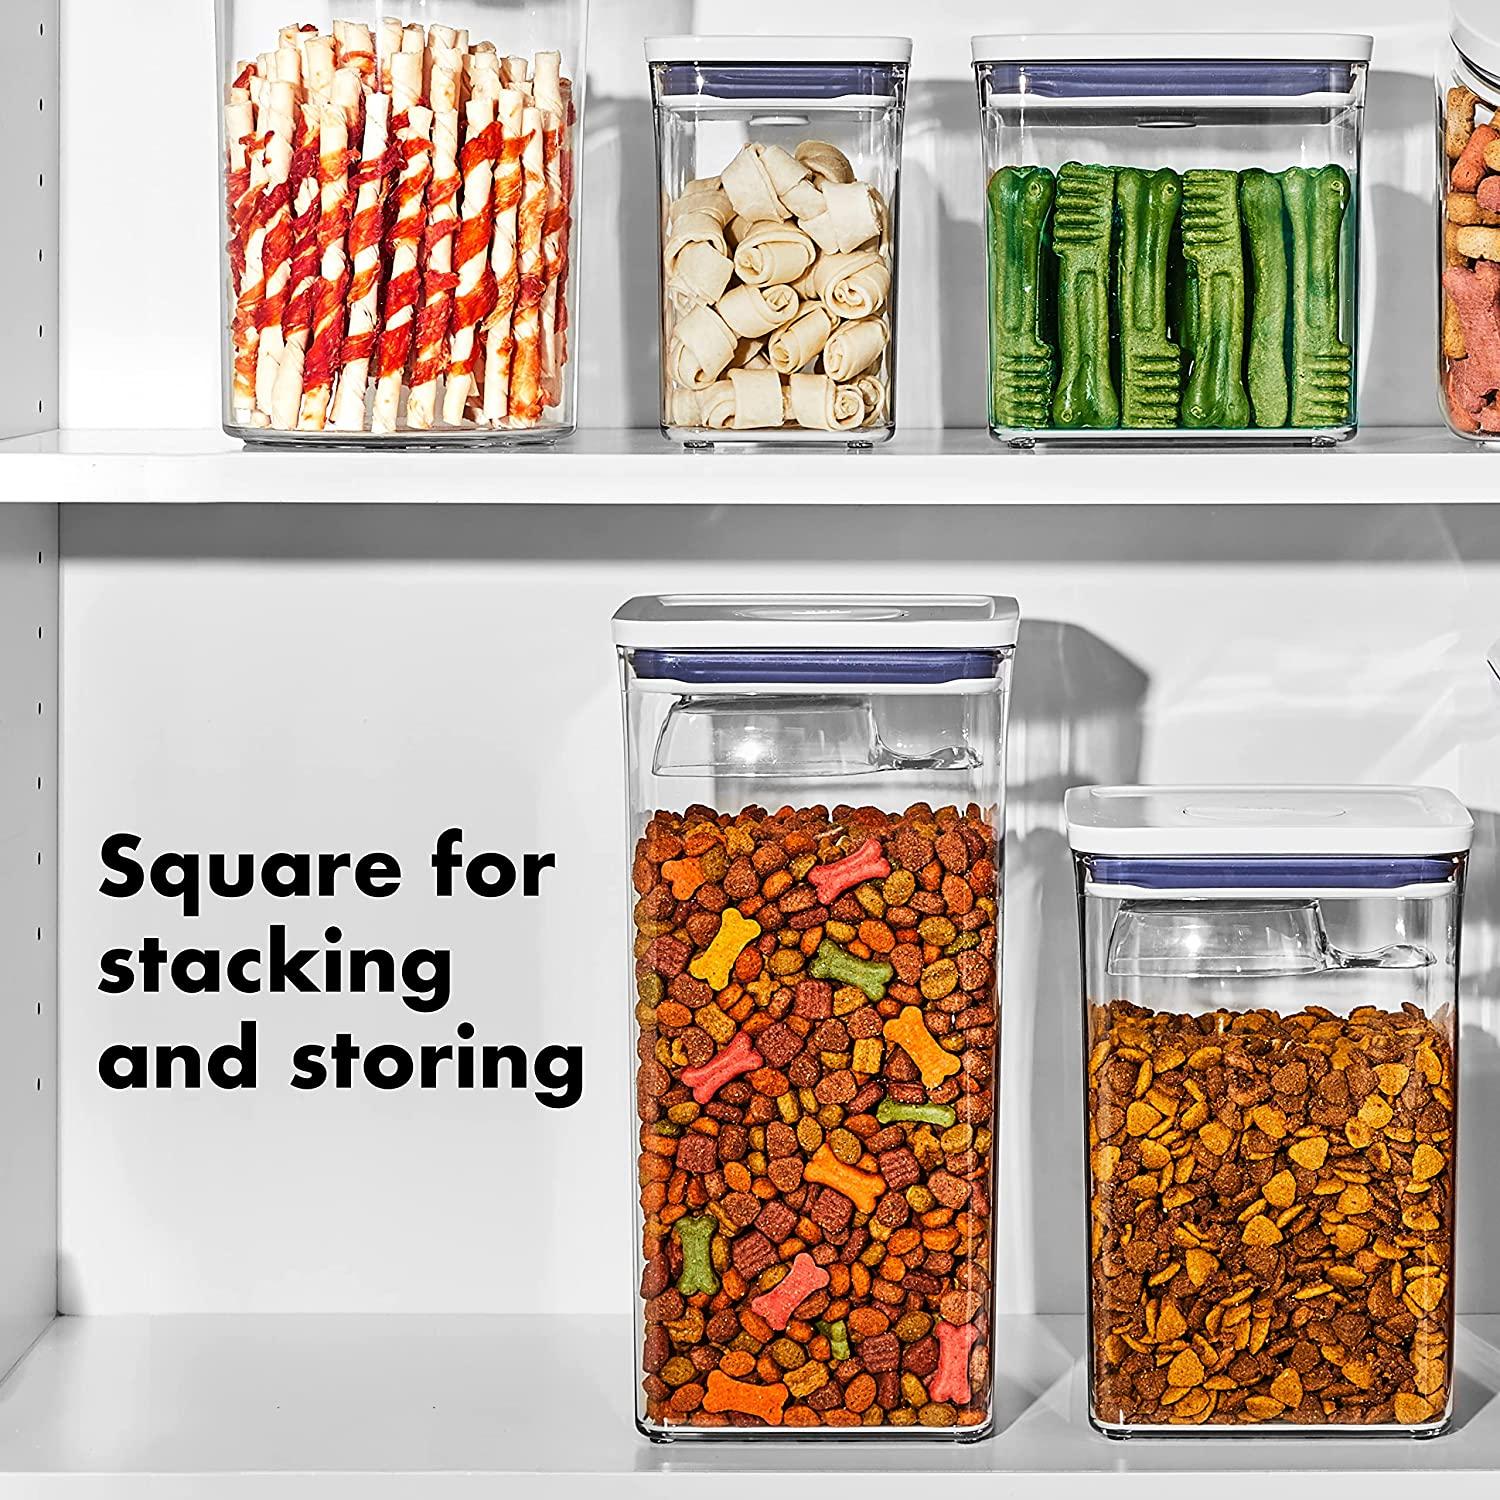 Oxo Pop 4.4qt Plastic Big Square Airtight Food Storage Container